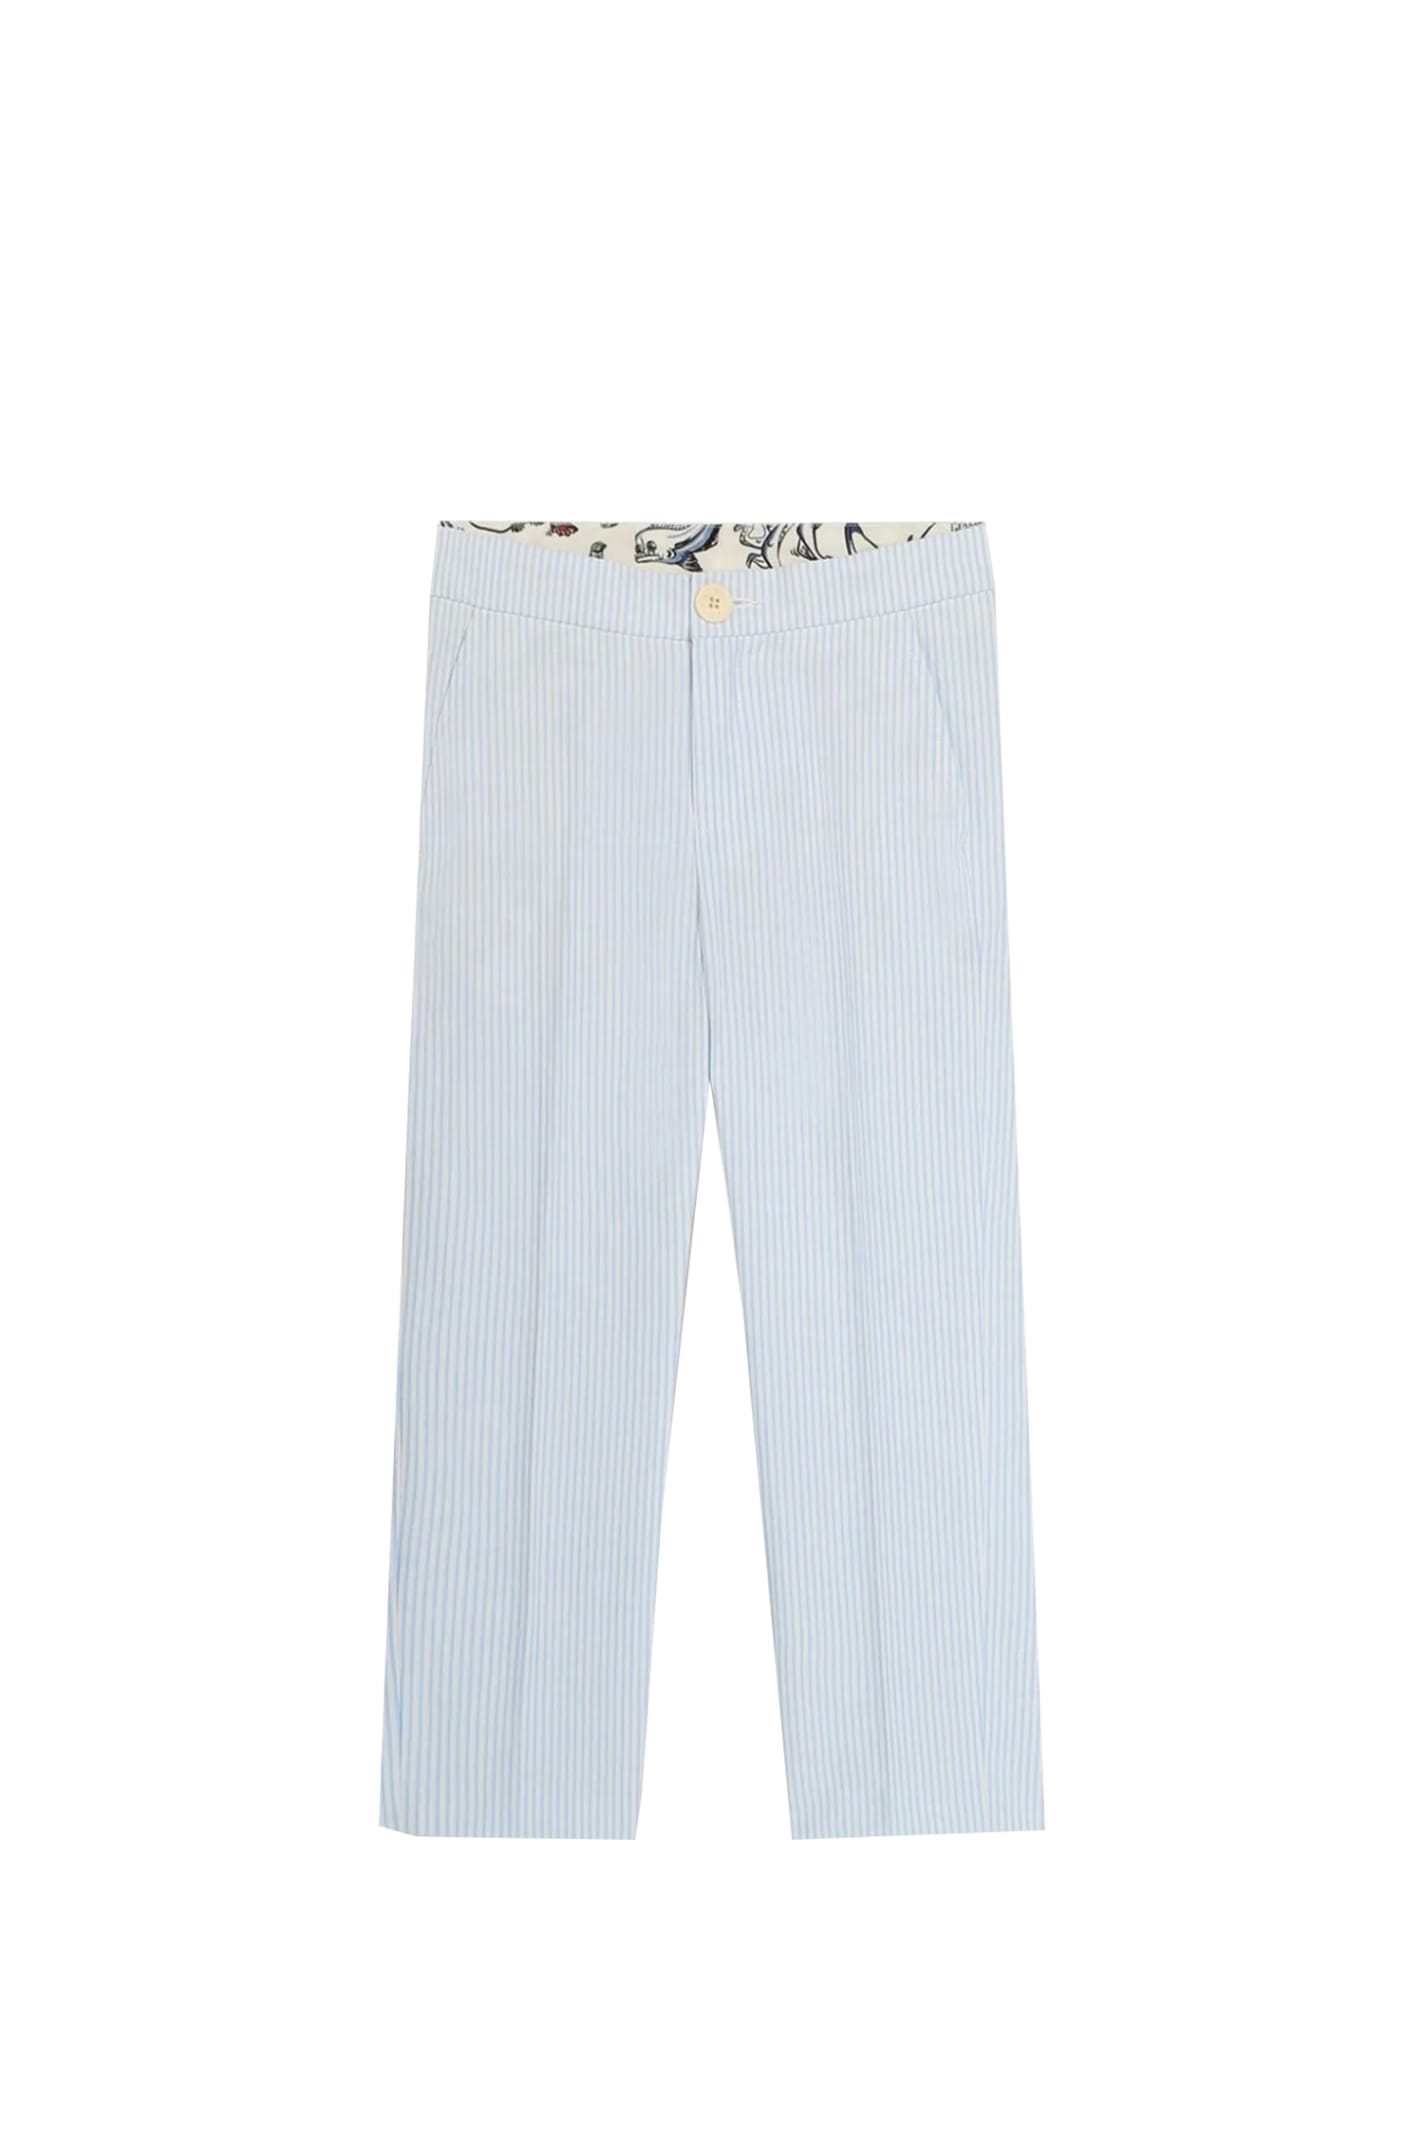 Shop Kenzo Cotton Pants In Light Blue